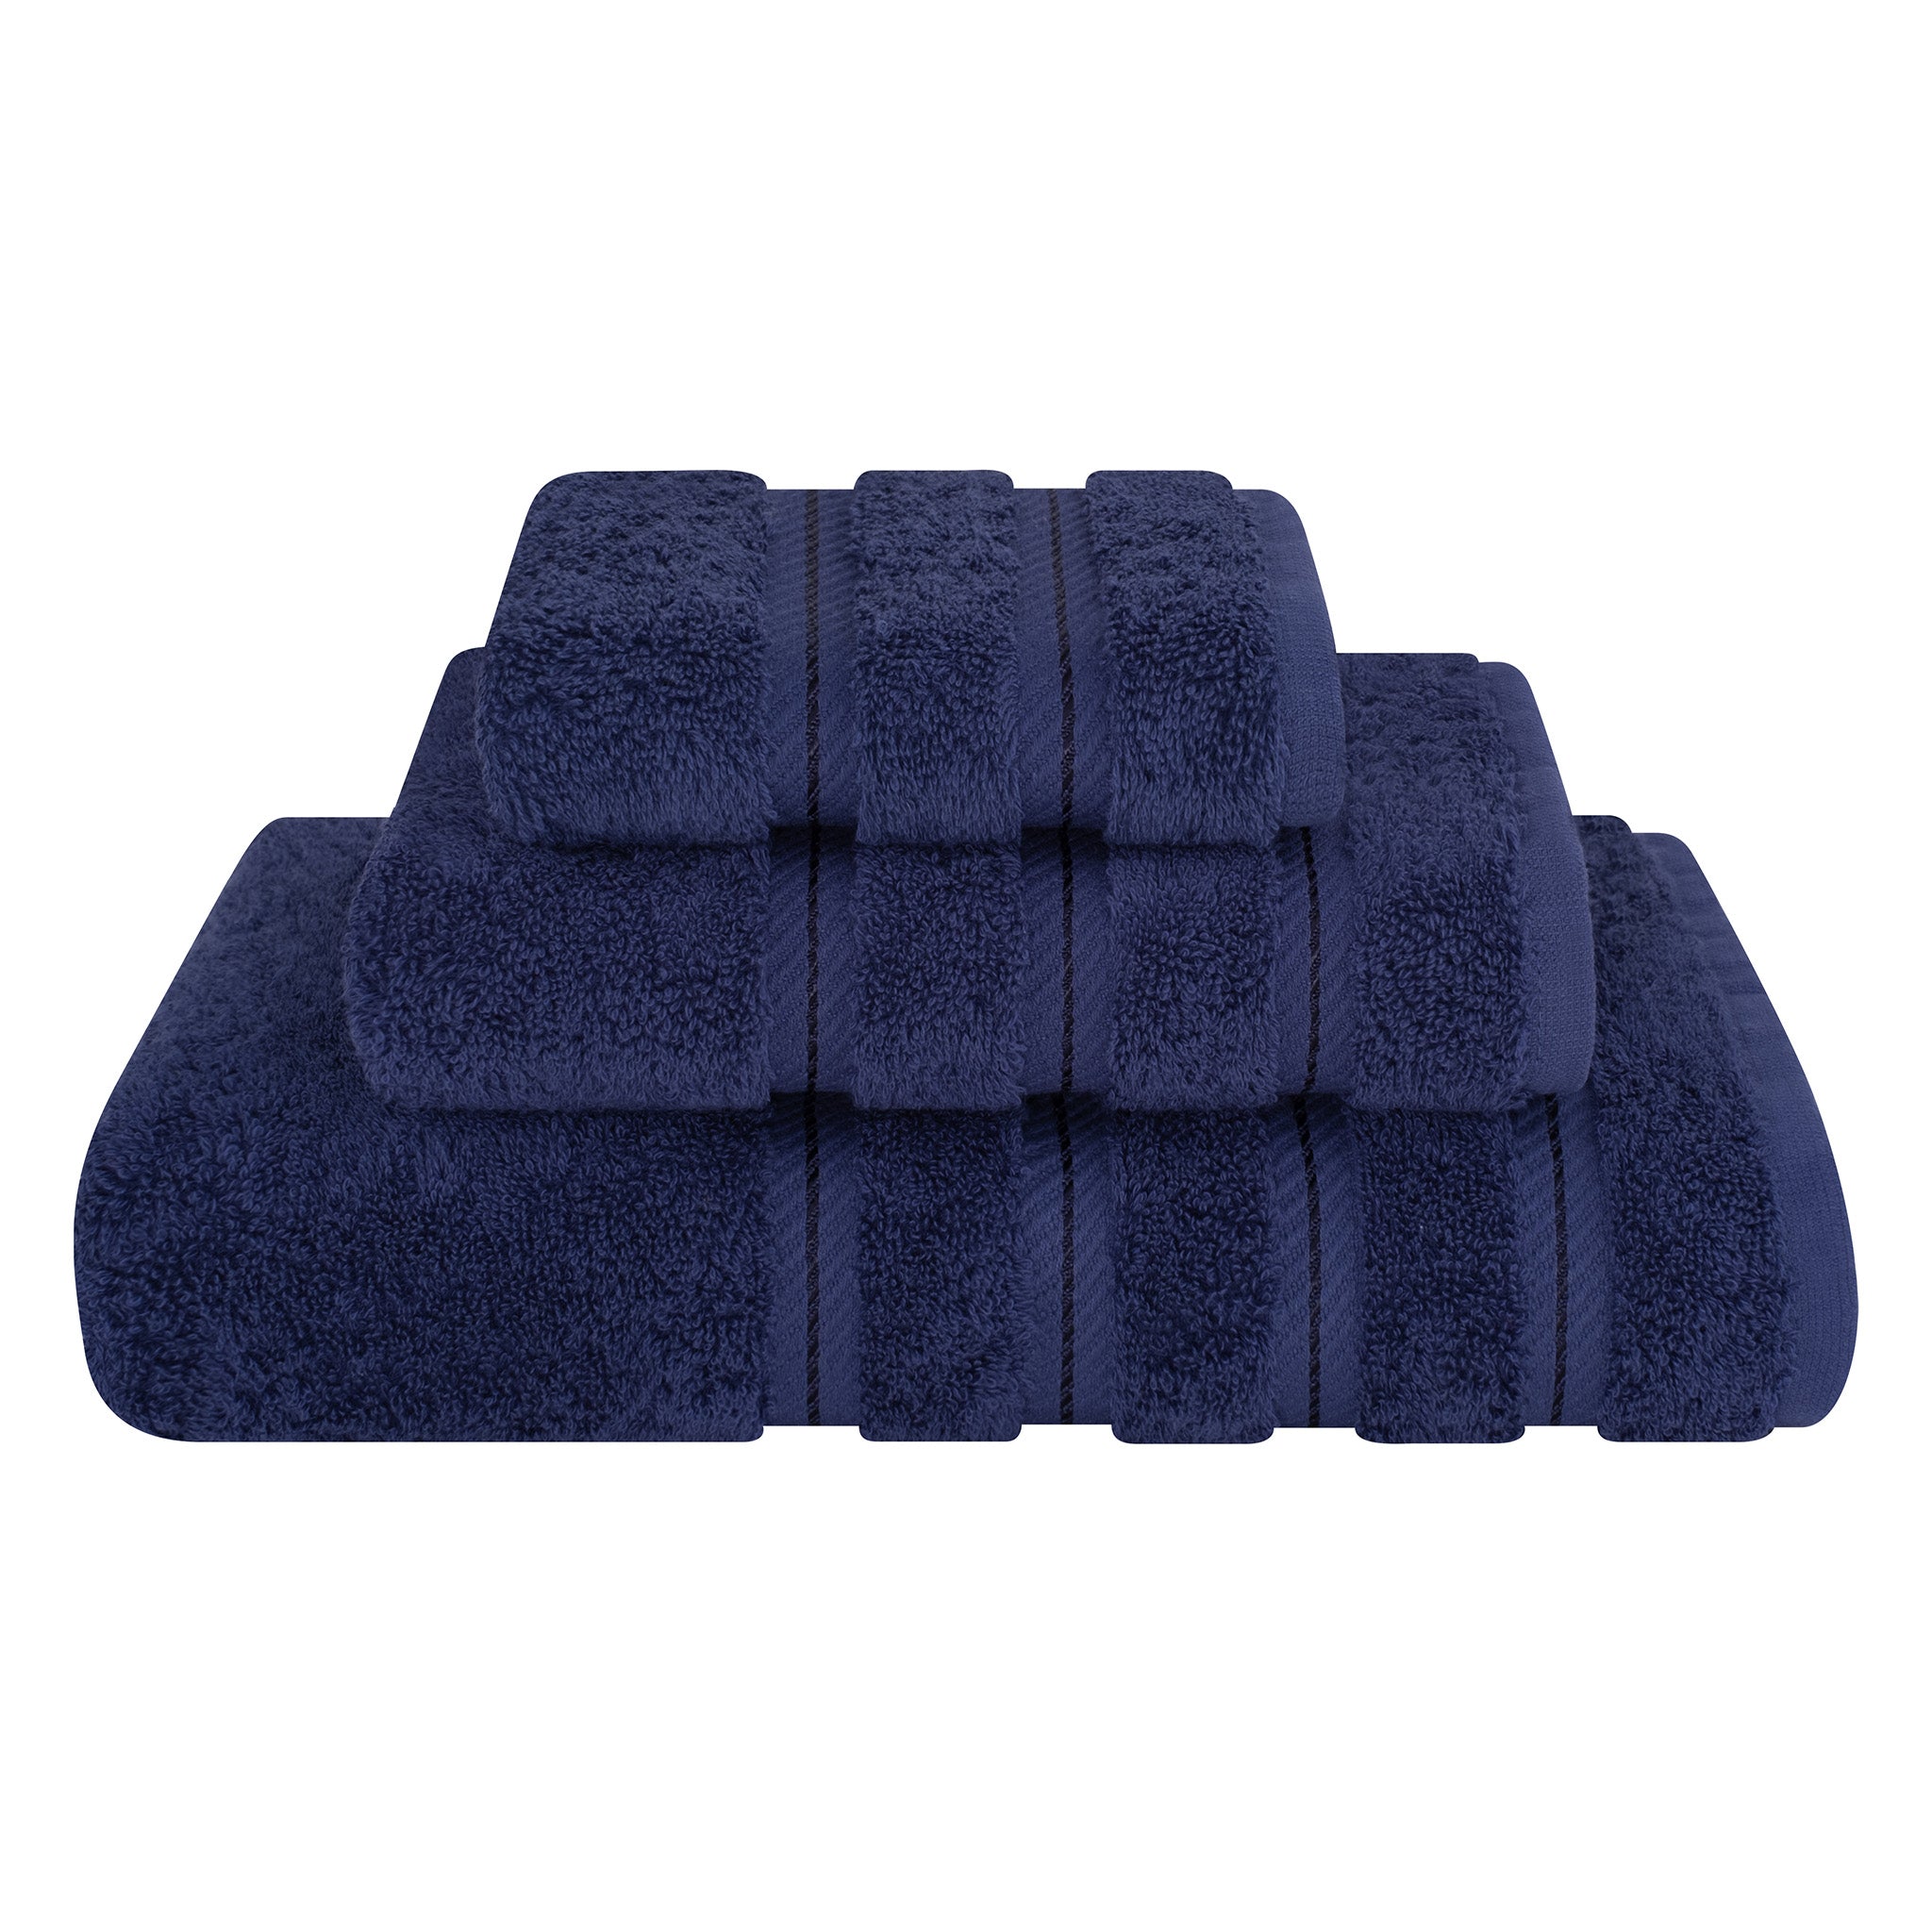 American Soft Linen 3 Piece Luxury Hotel Towel Set 20 set case pack navy-blue-1